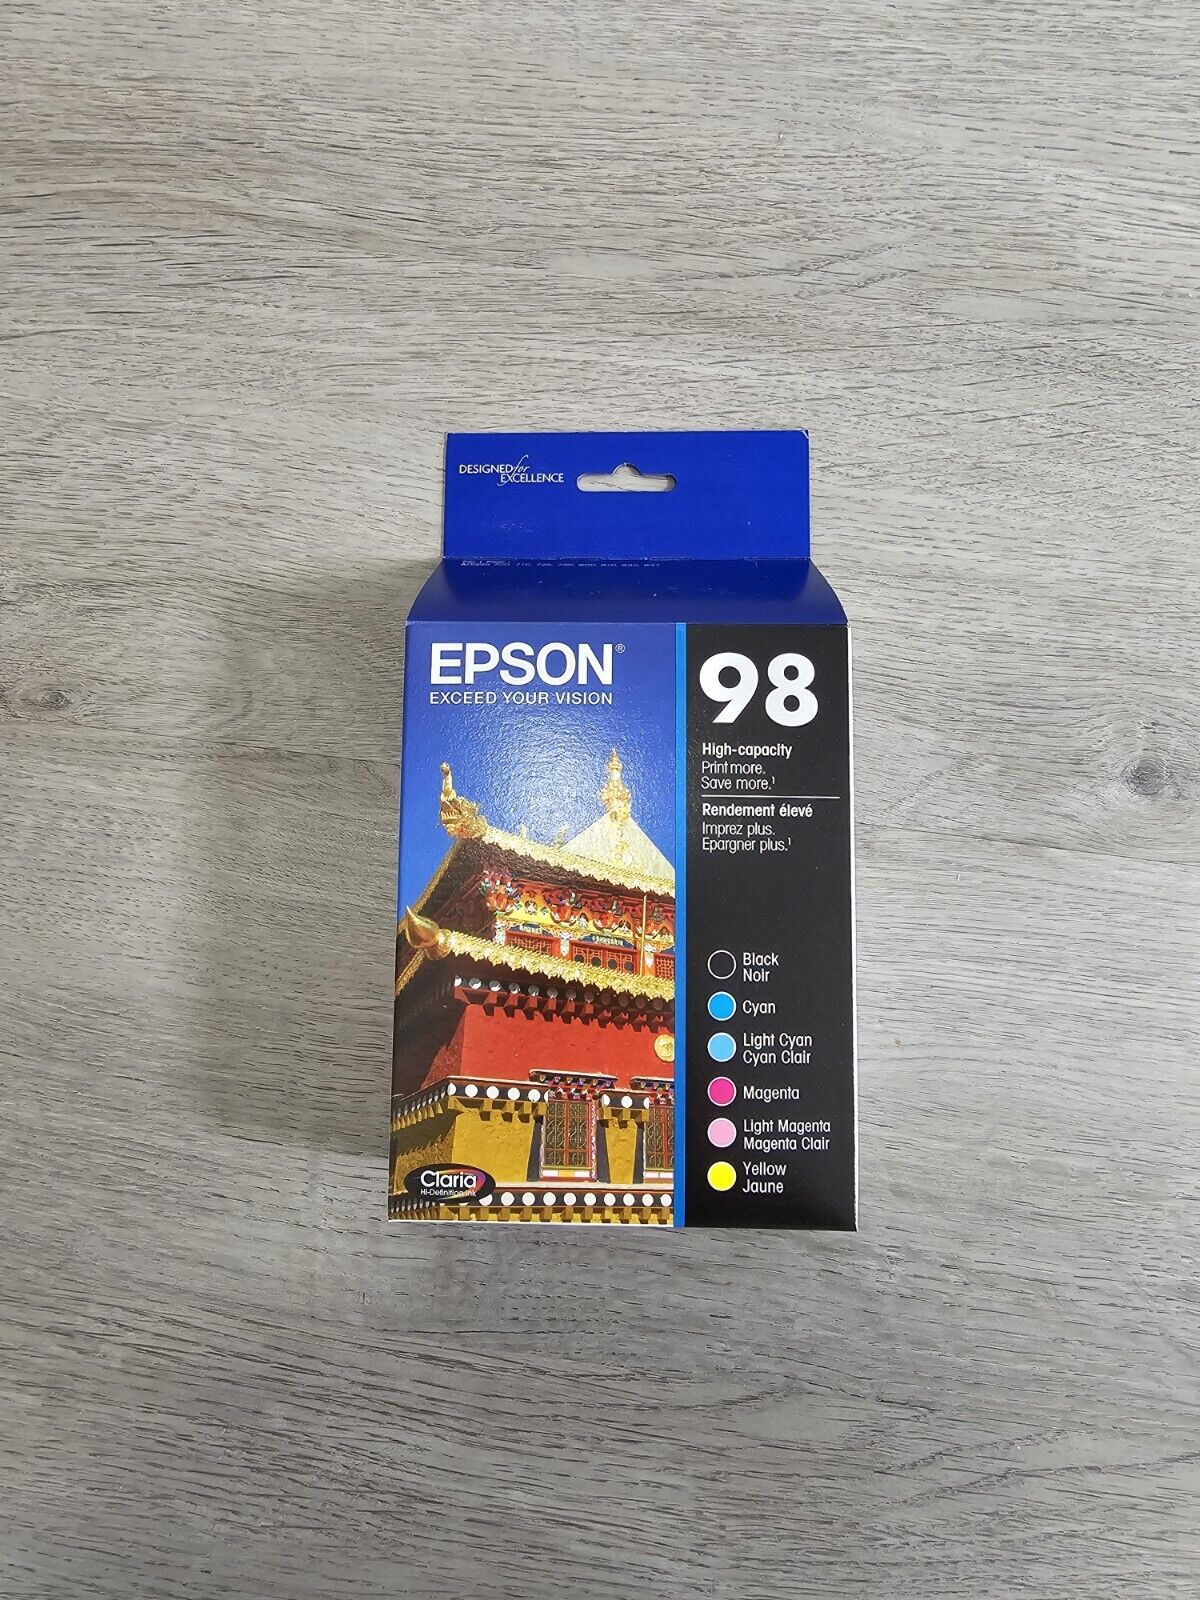 NEW Genuine Epson 98 High-capacity Ink 6 New Exp 2026 